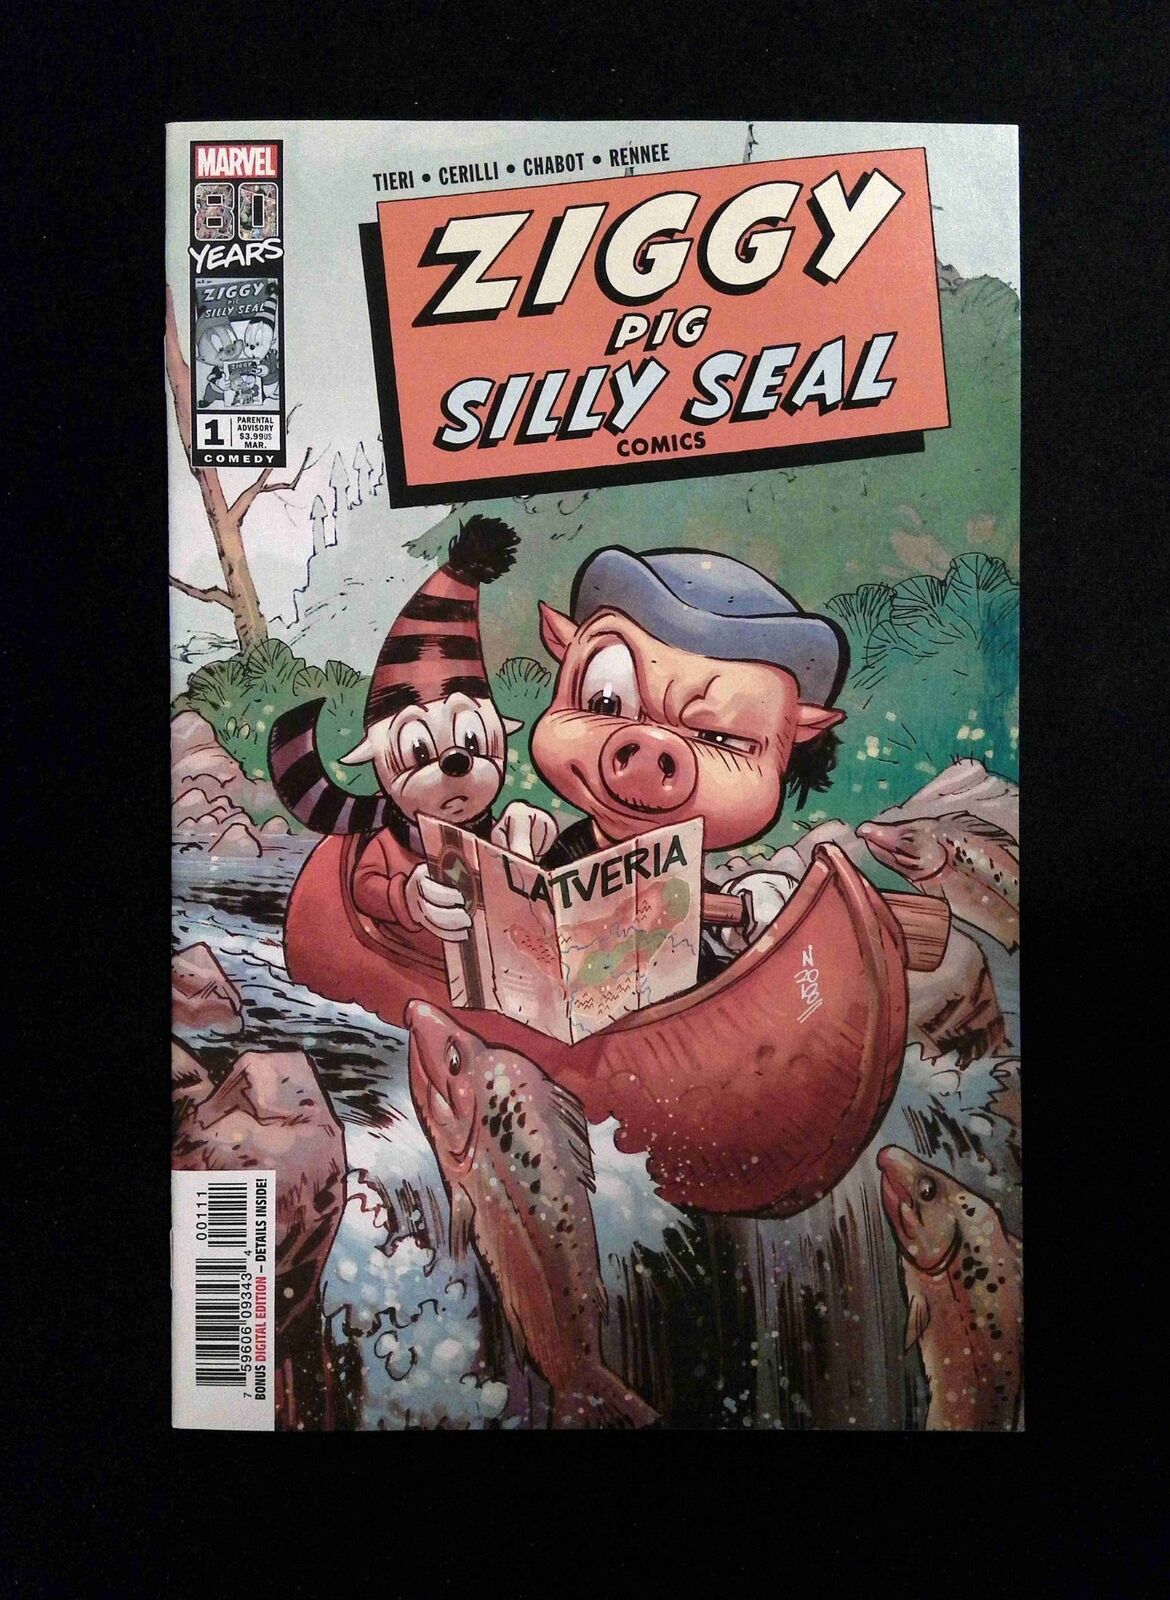 Ziggy Pig Silly Seal Comics #1  MARVEL Comics 2019 VF+